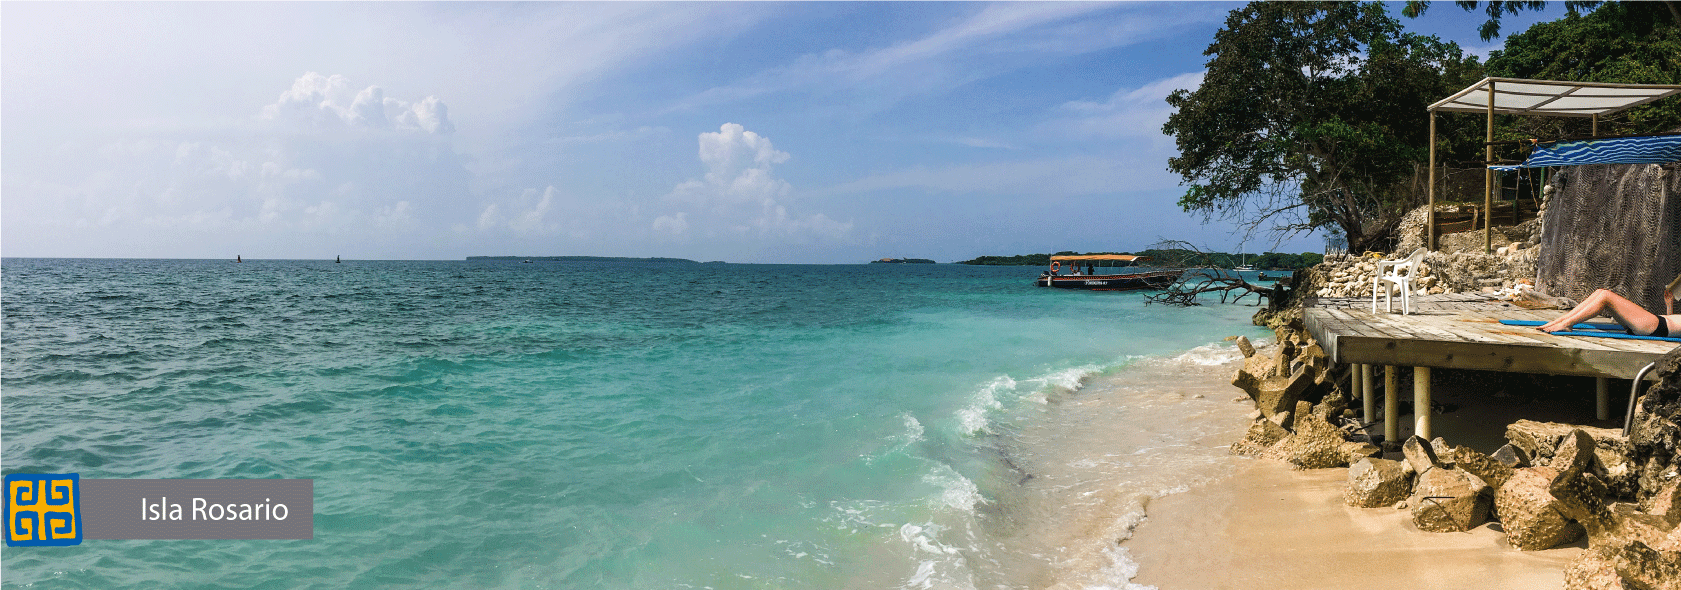 Isla Rosario